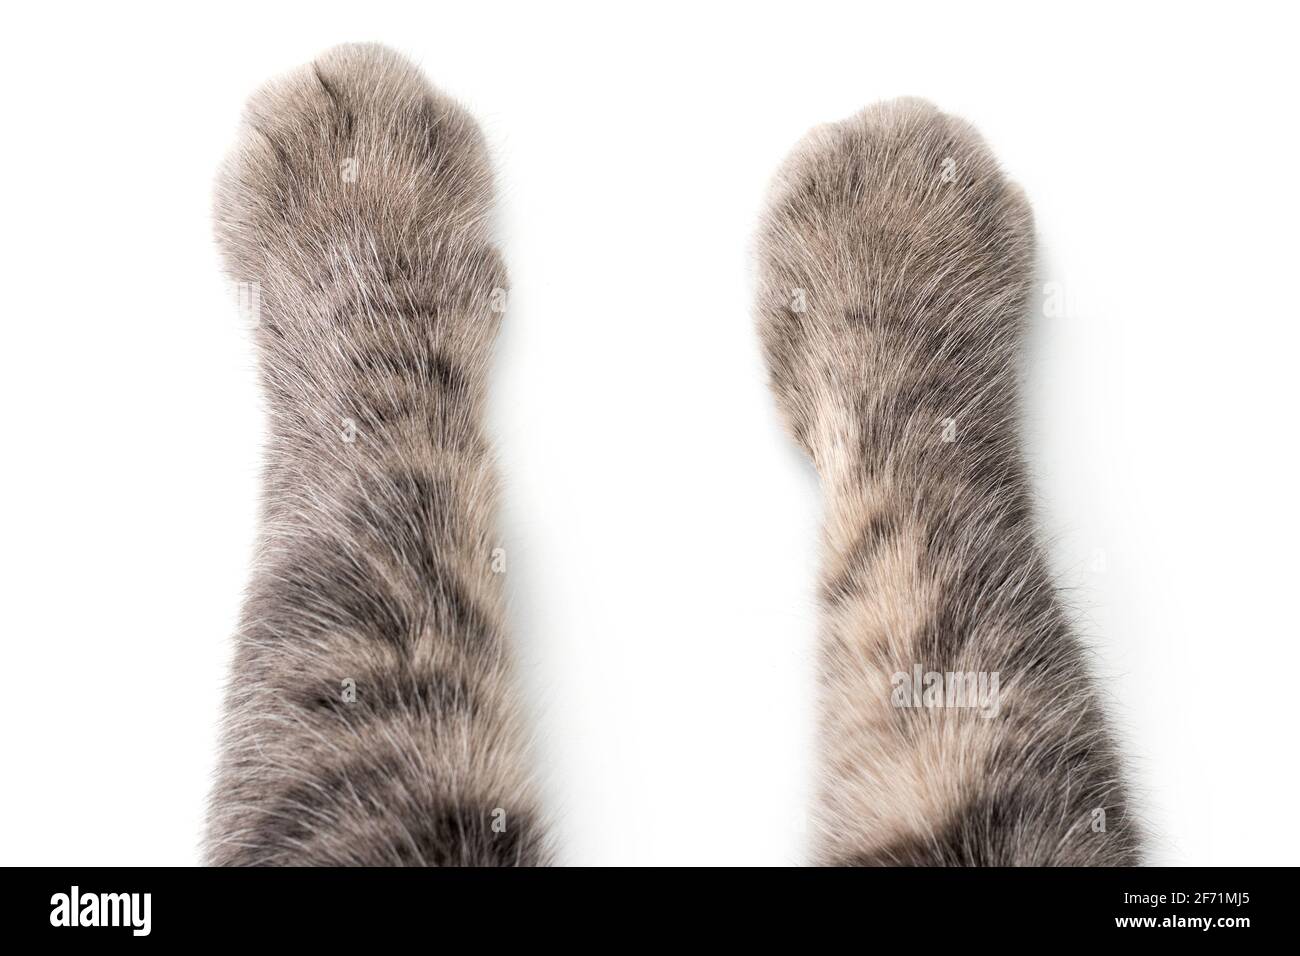 Cat's Paws on white Stock Photo - Alamy